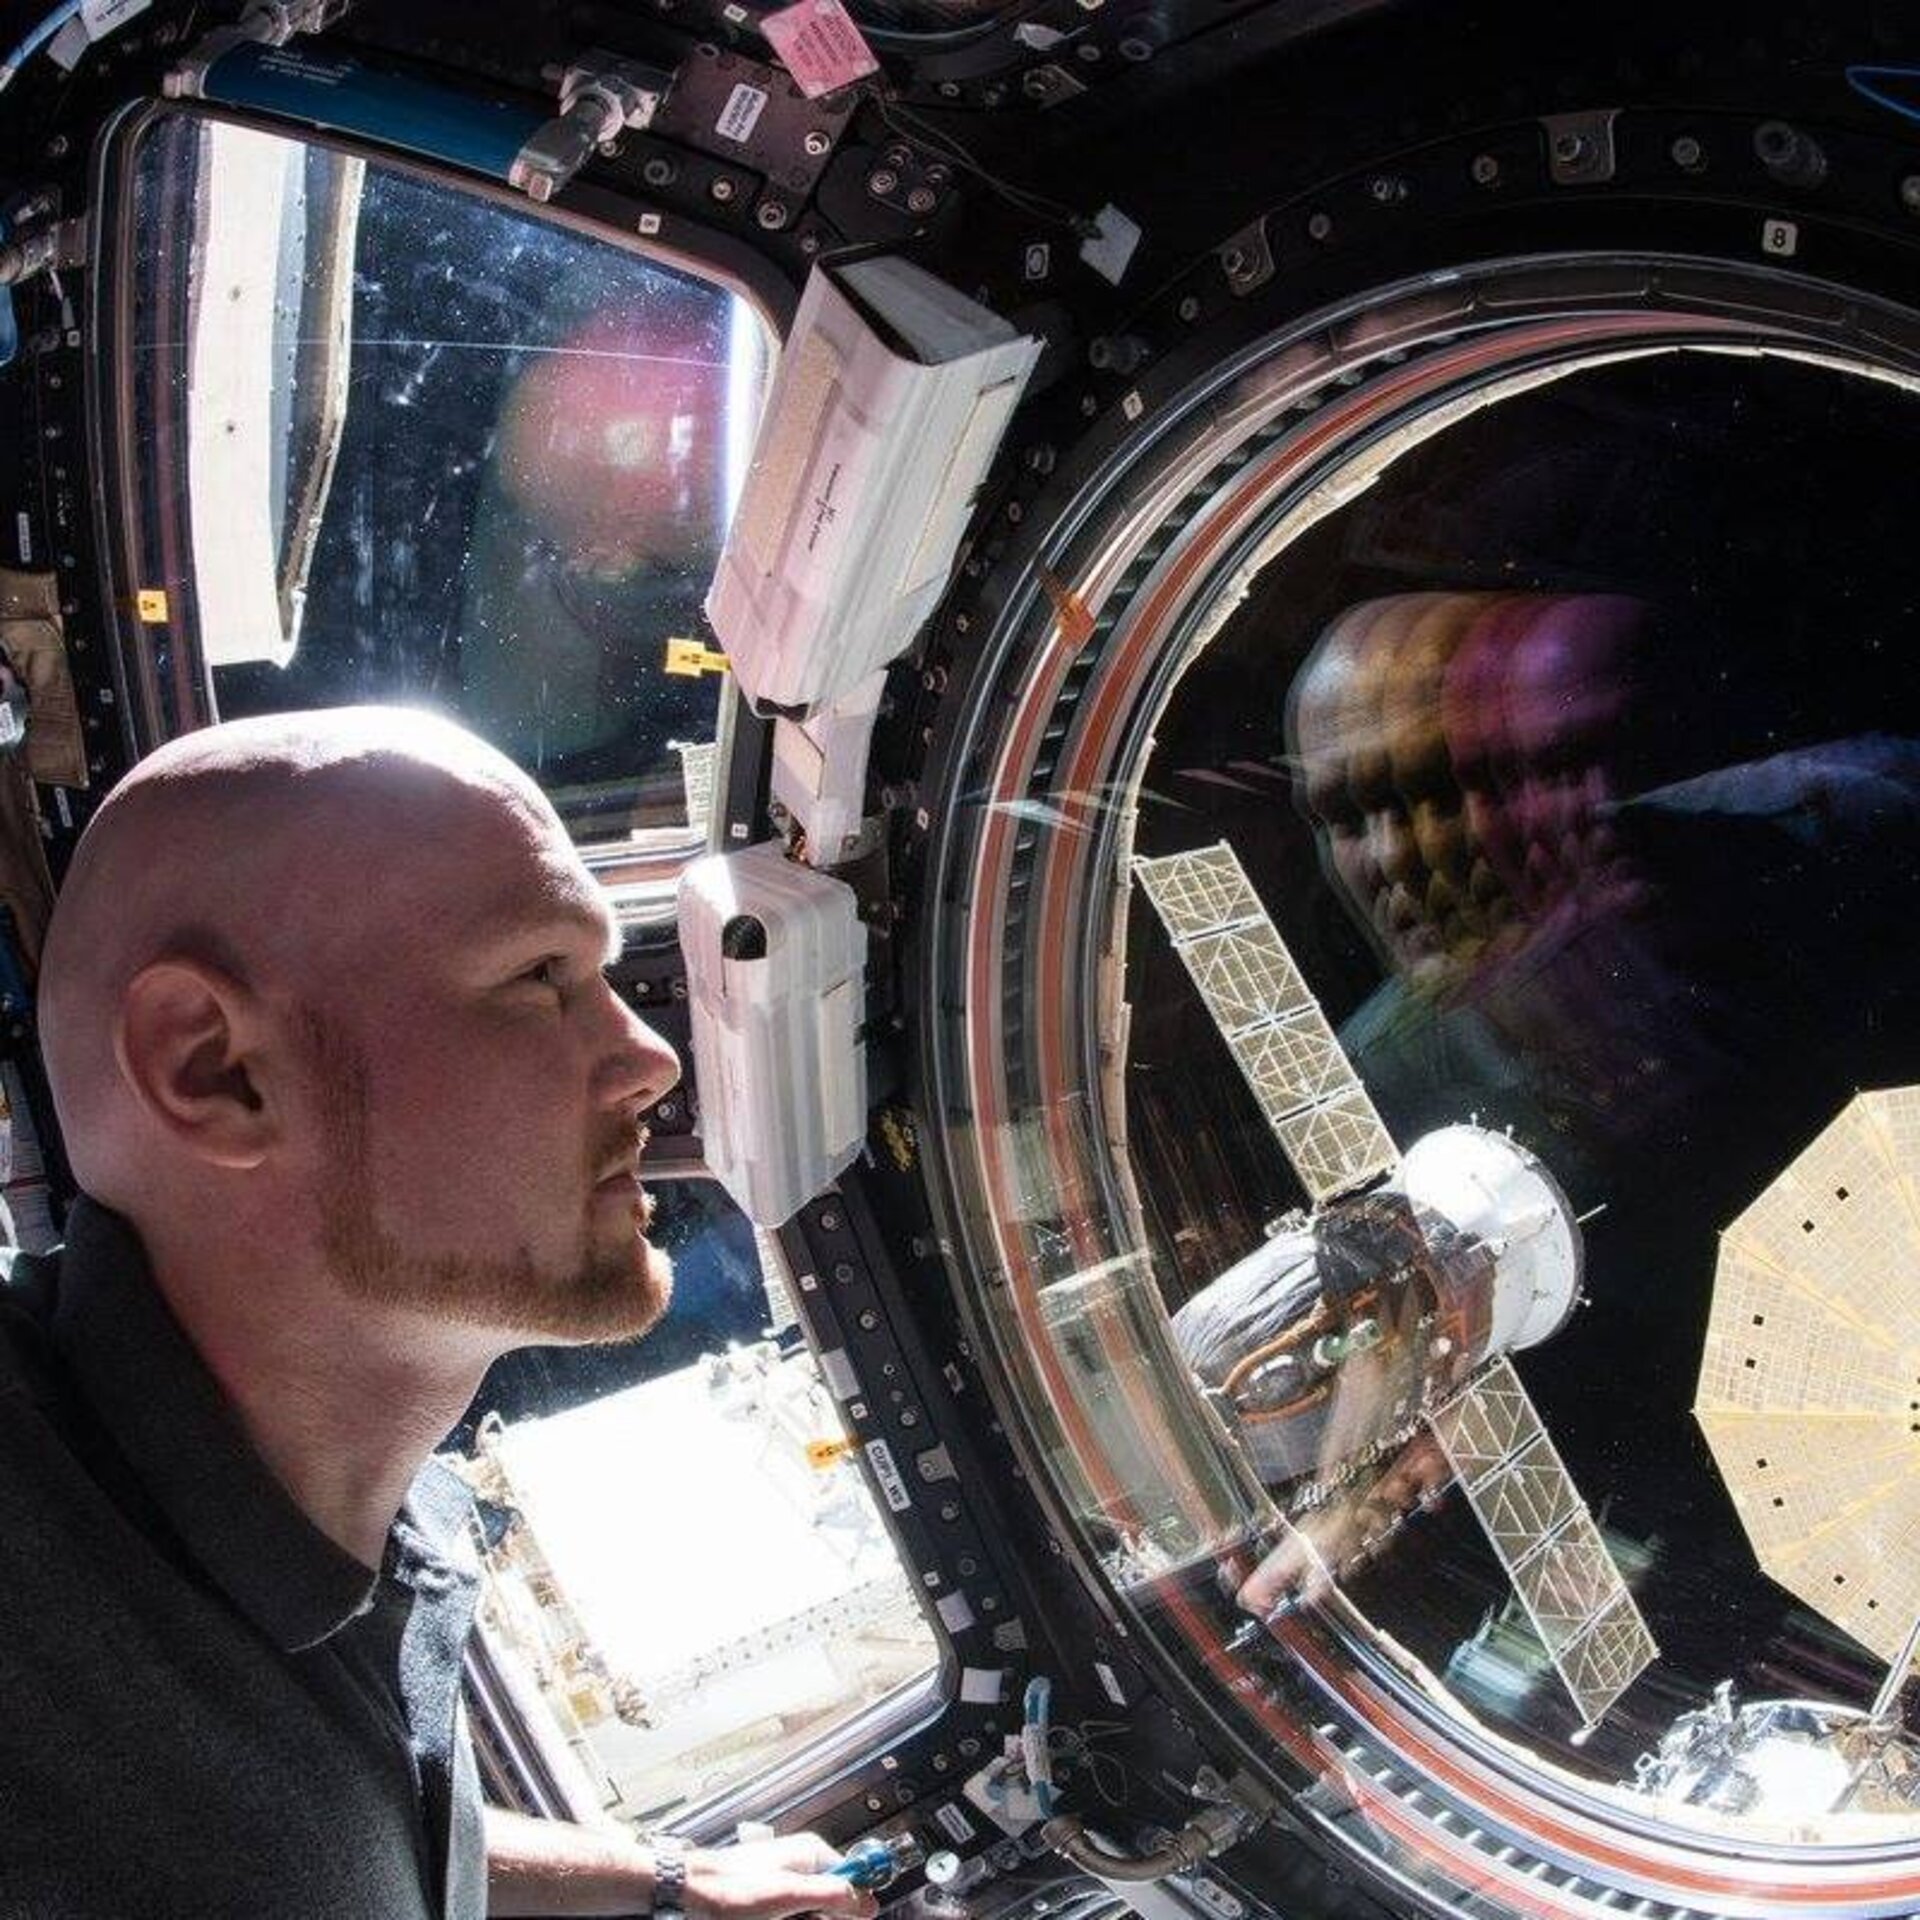 An astronaut's reflection